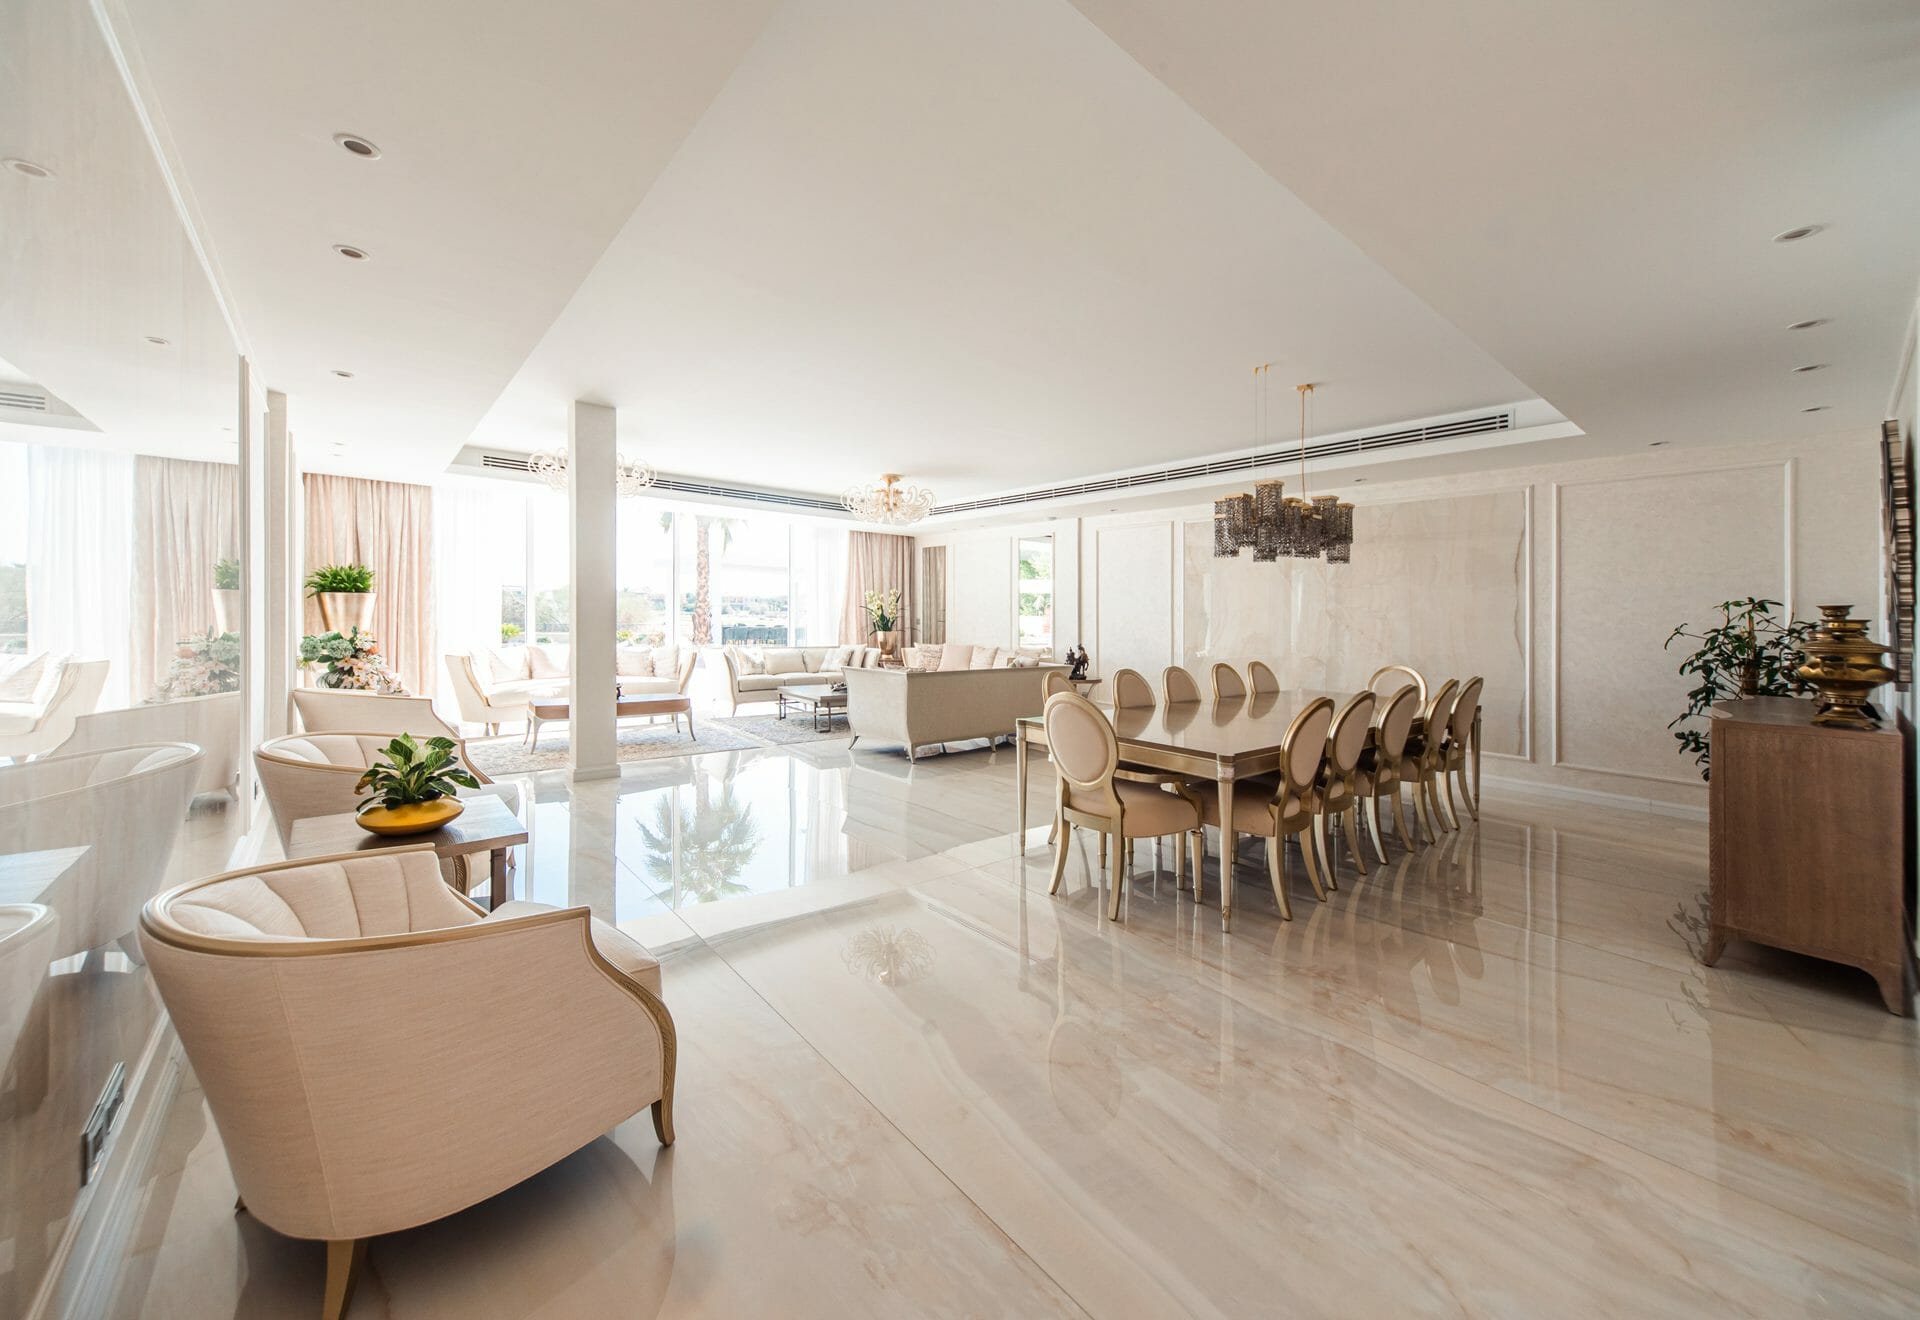 Smart Renovation Design & Fit-Out Company in Dubai presents beautiful villa renovation.